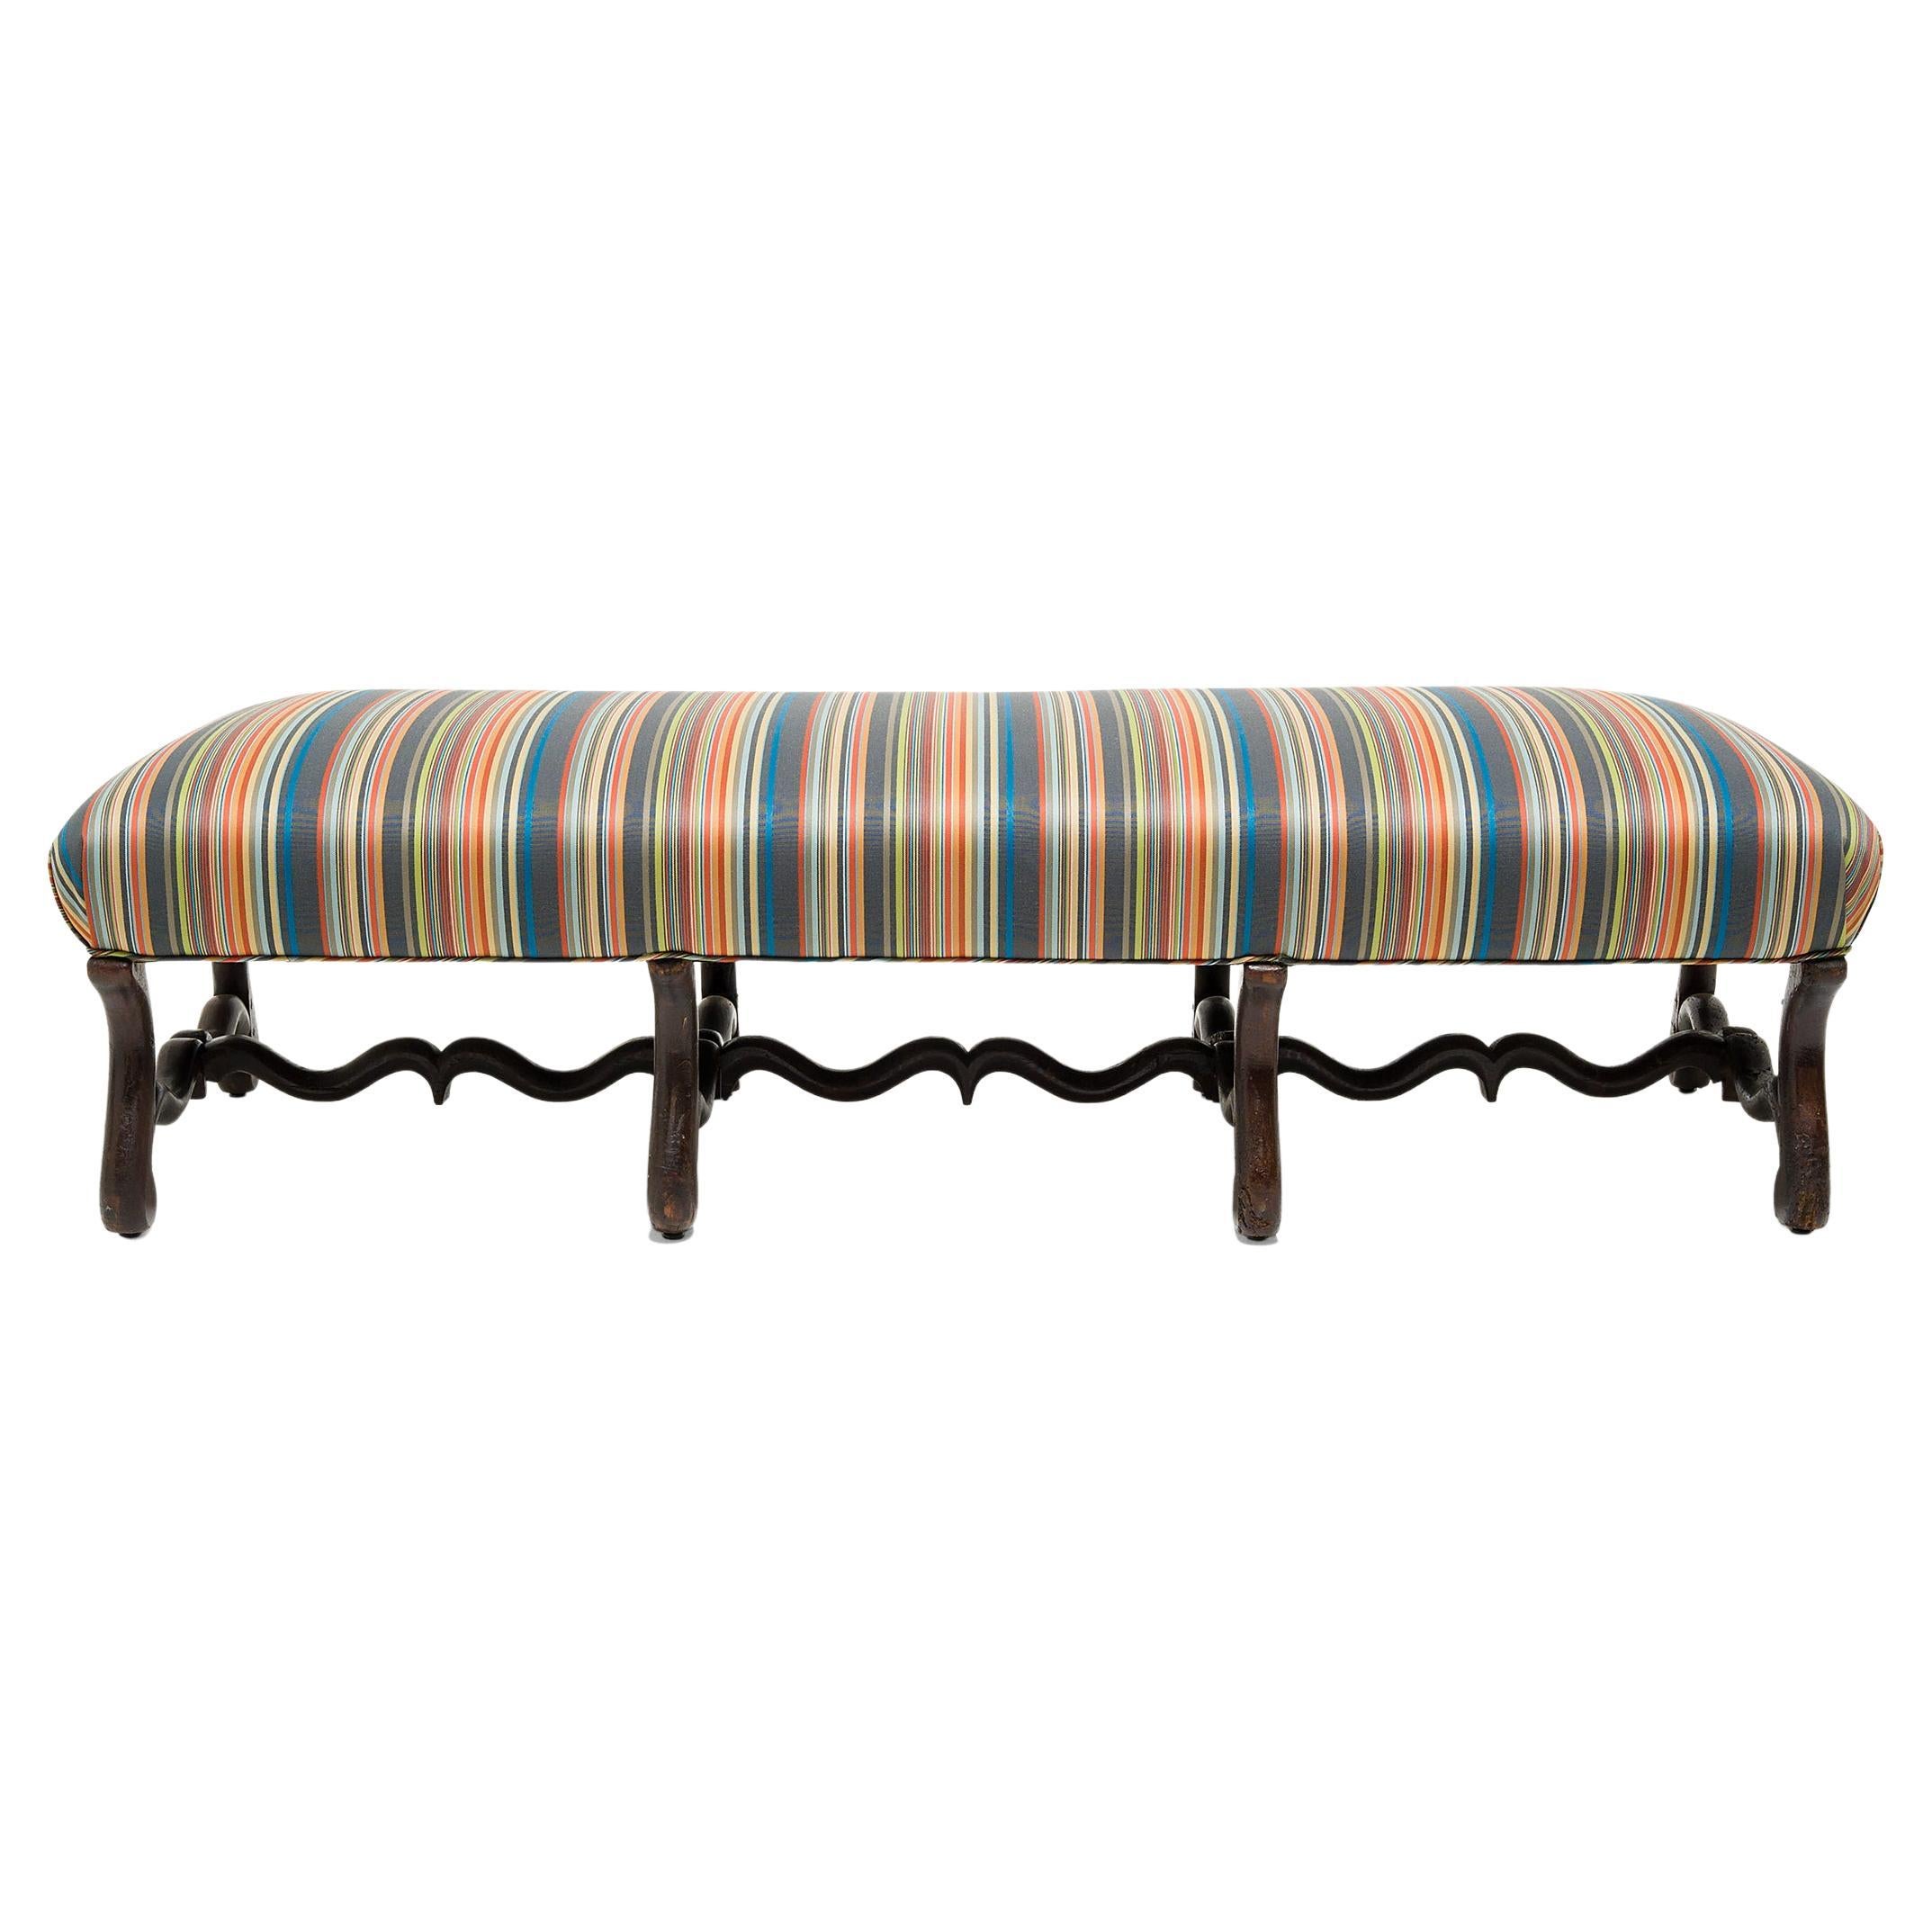 Long Upholstered Os de Mouton Bench, c. 1800